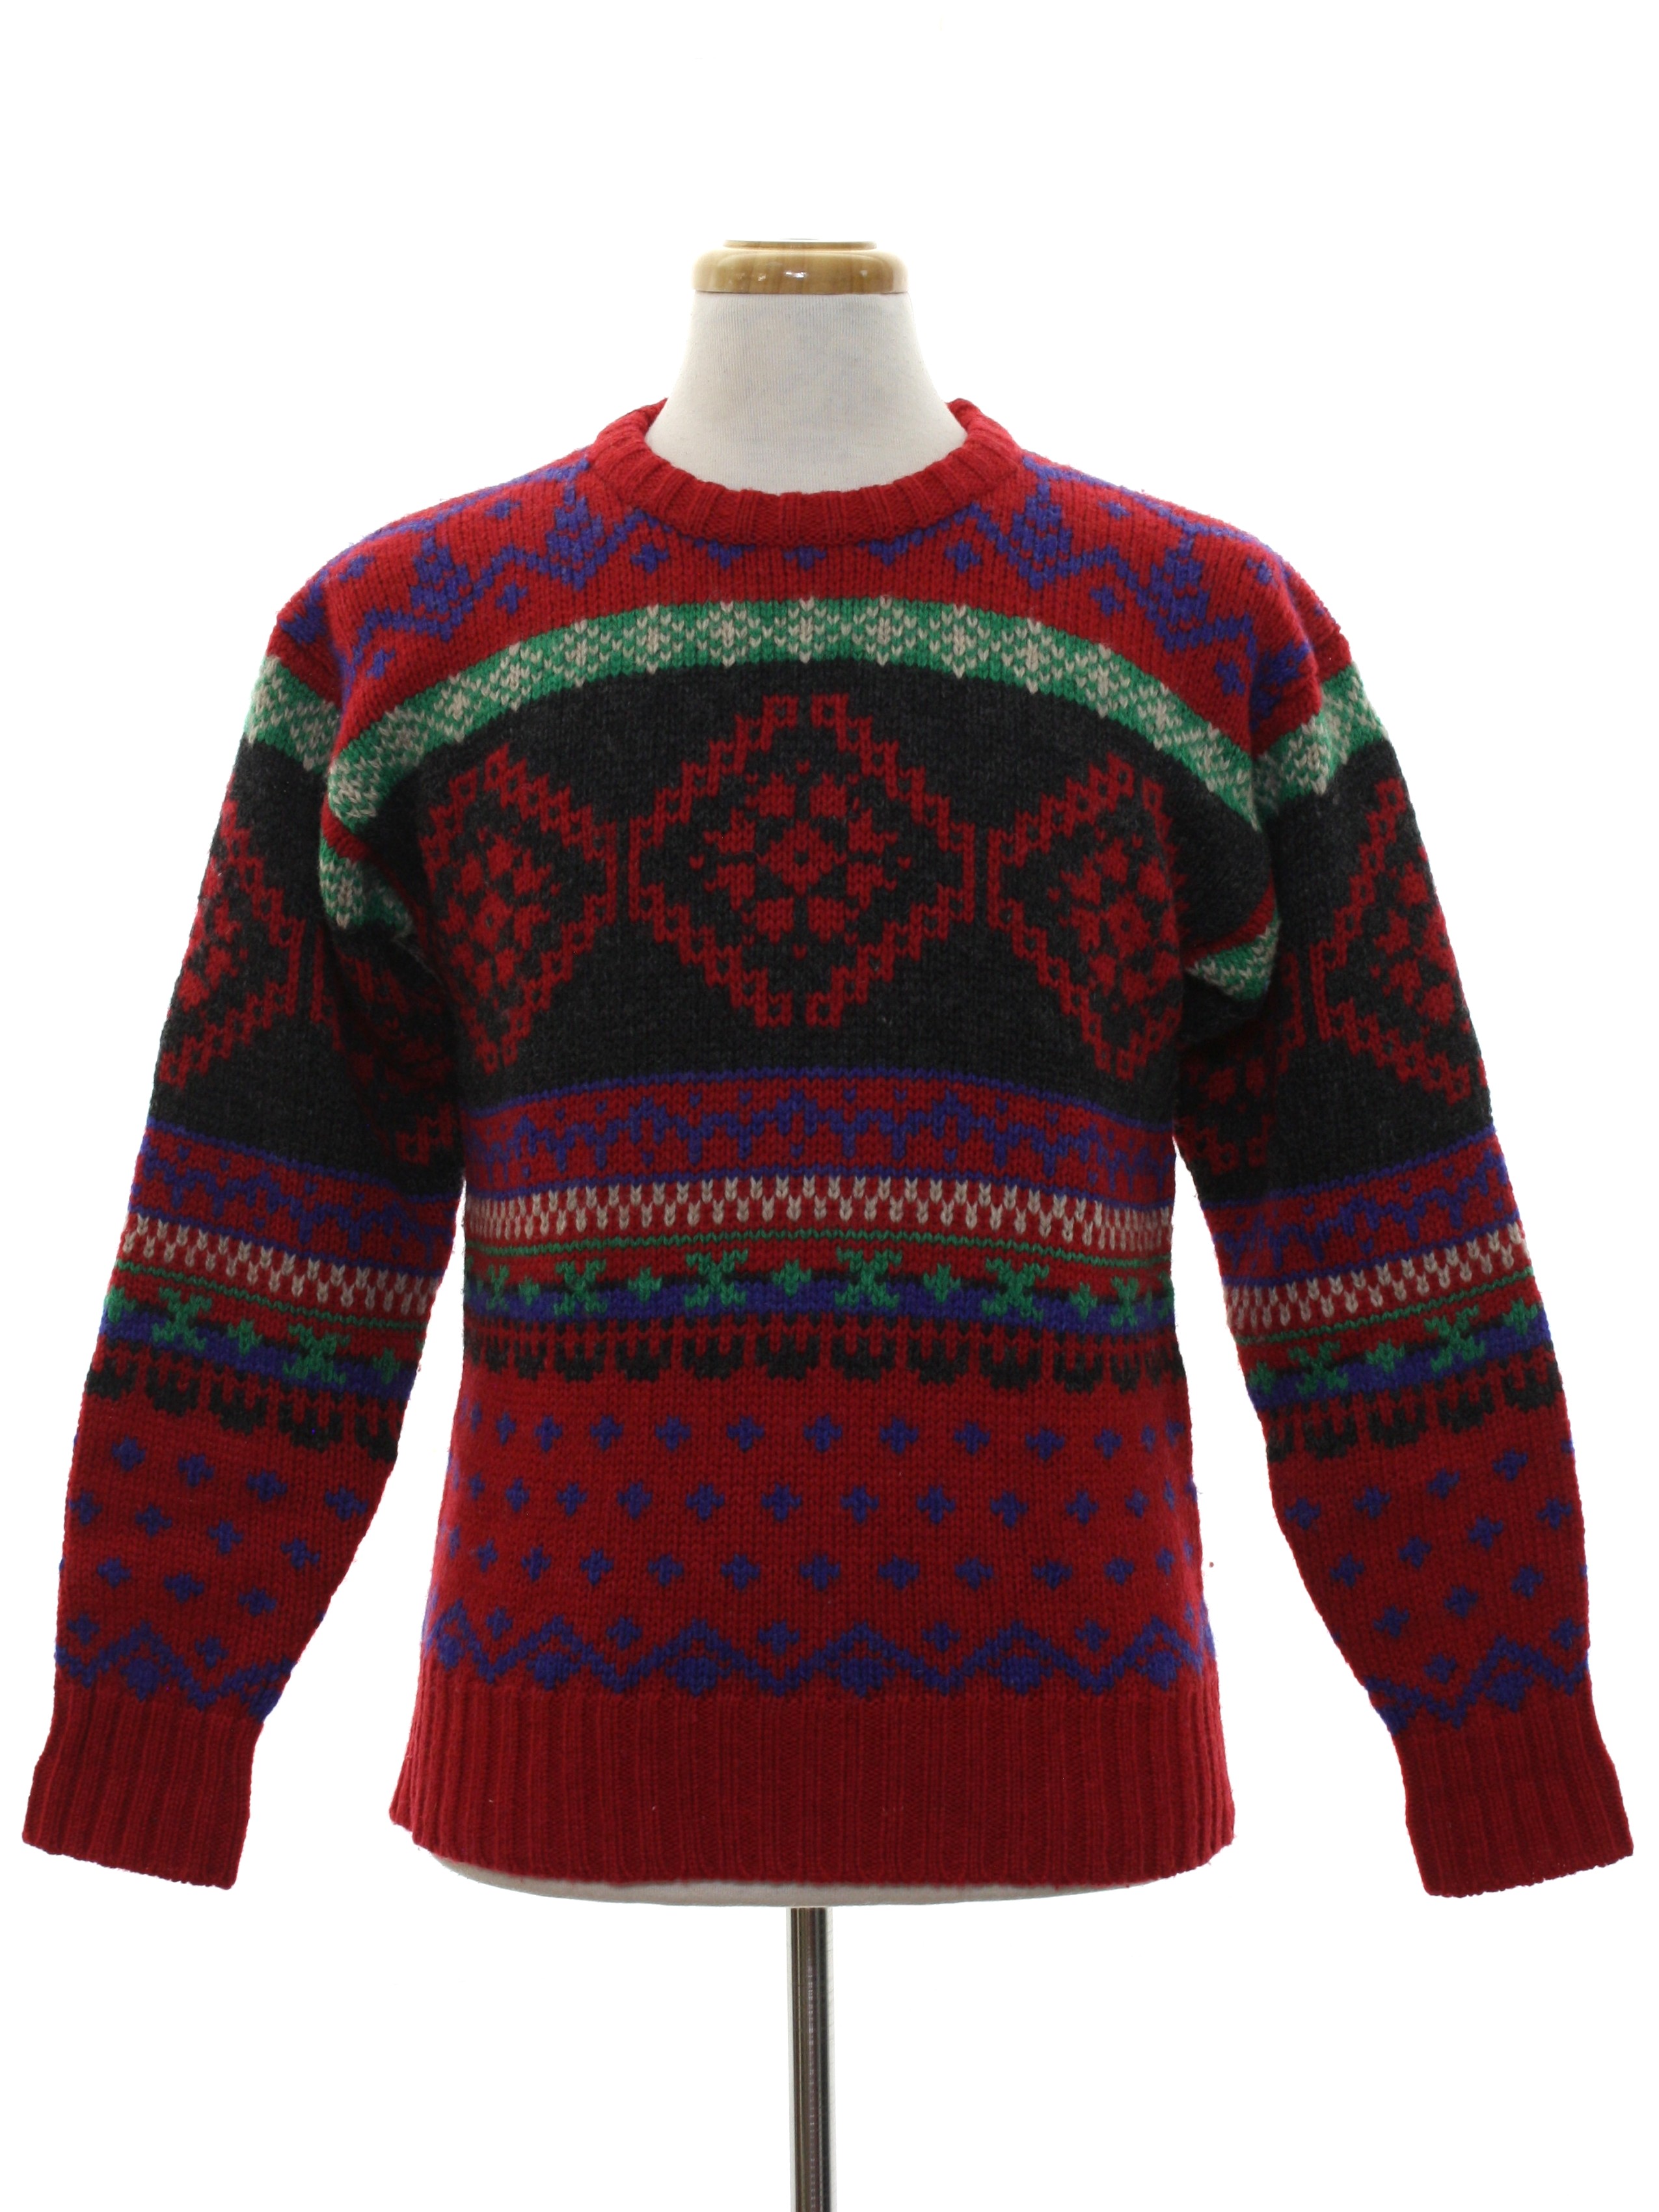 Retro 1990s Sweater: 90s -Chaps Ralph Lauren- Mens red background wool ...